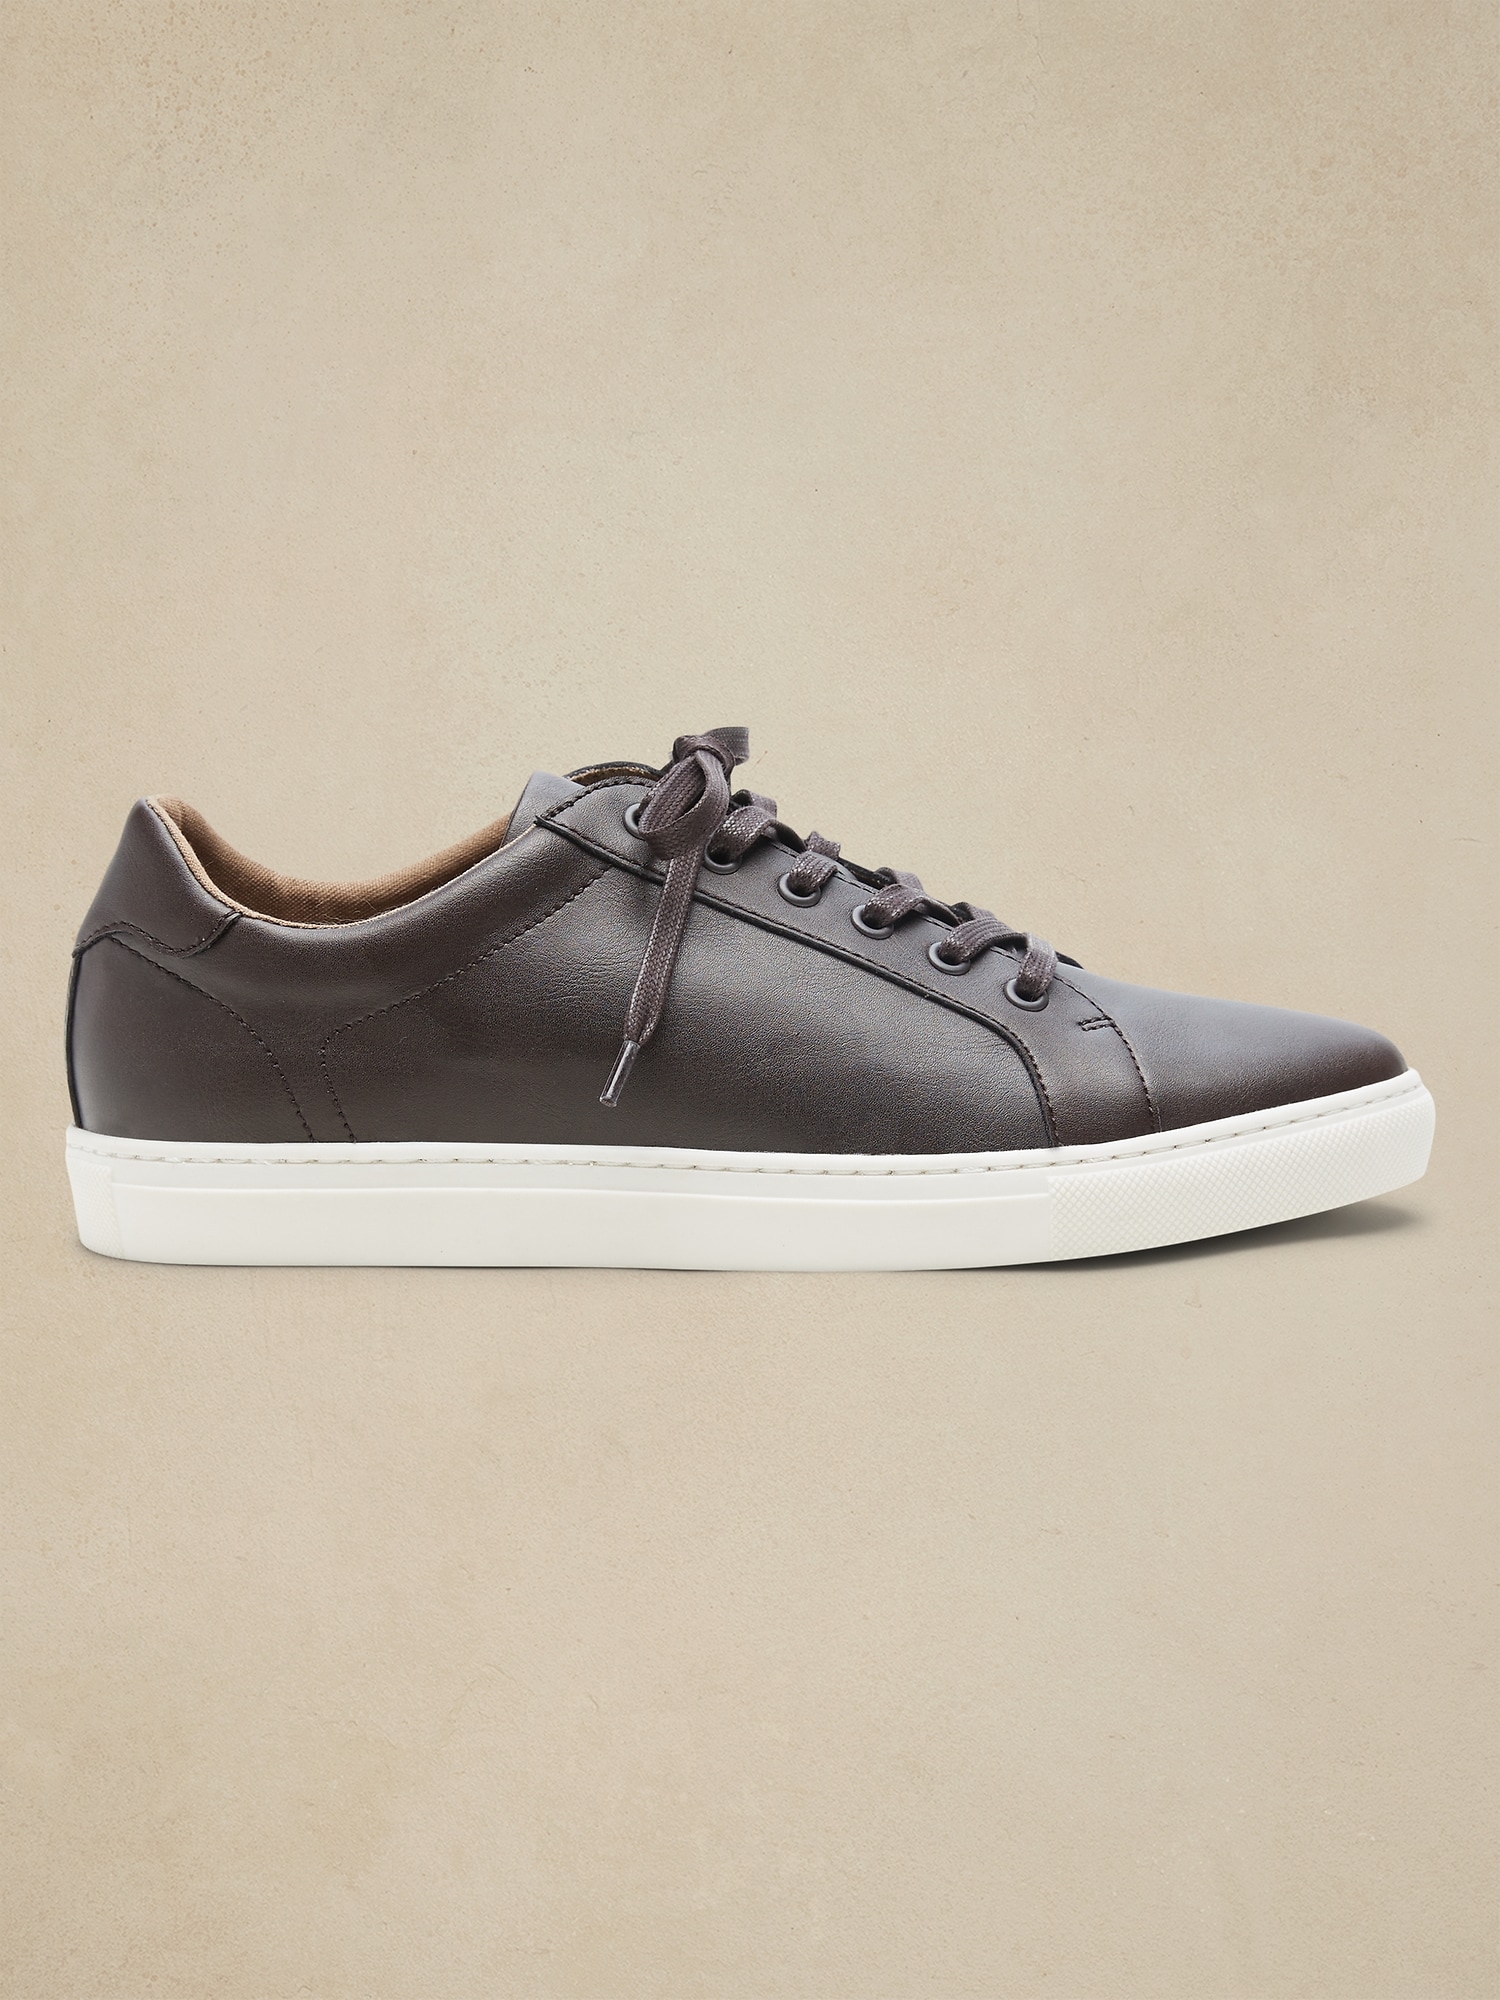 Vans Classic Leather Slip-on Sneaker in Brown | Lyst